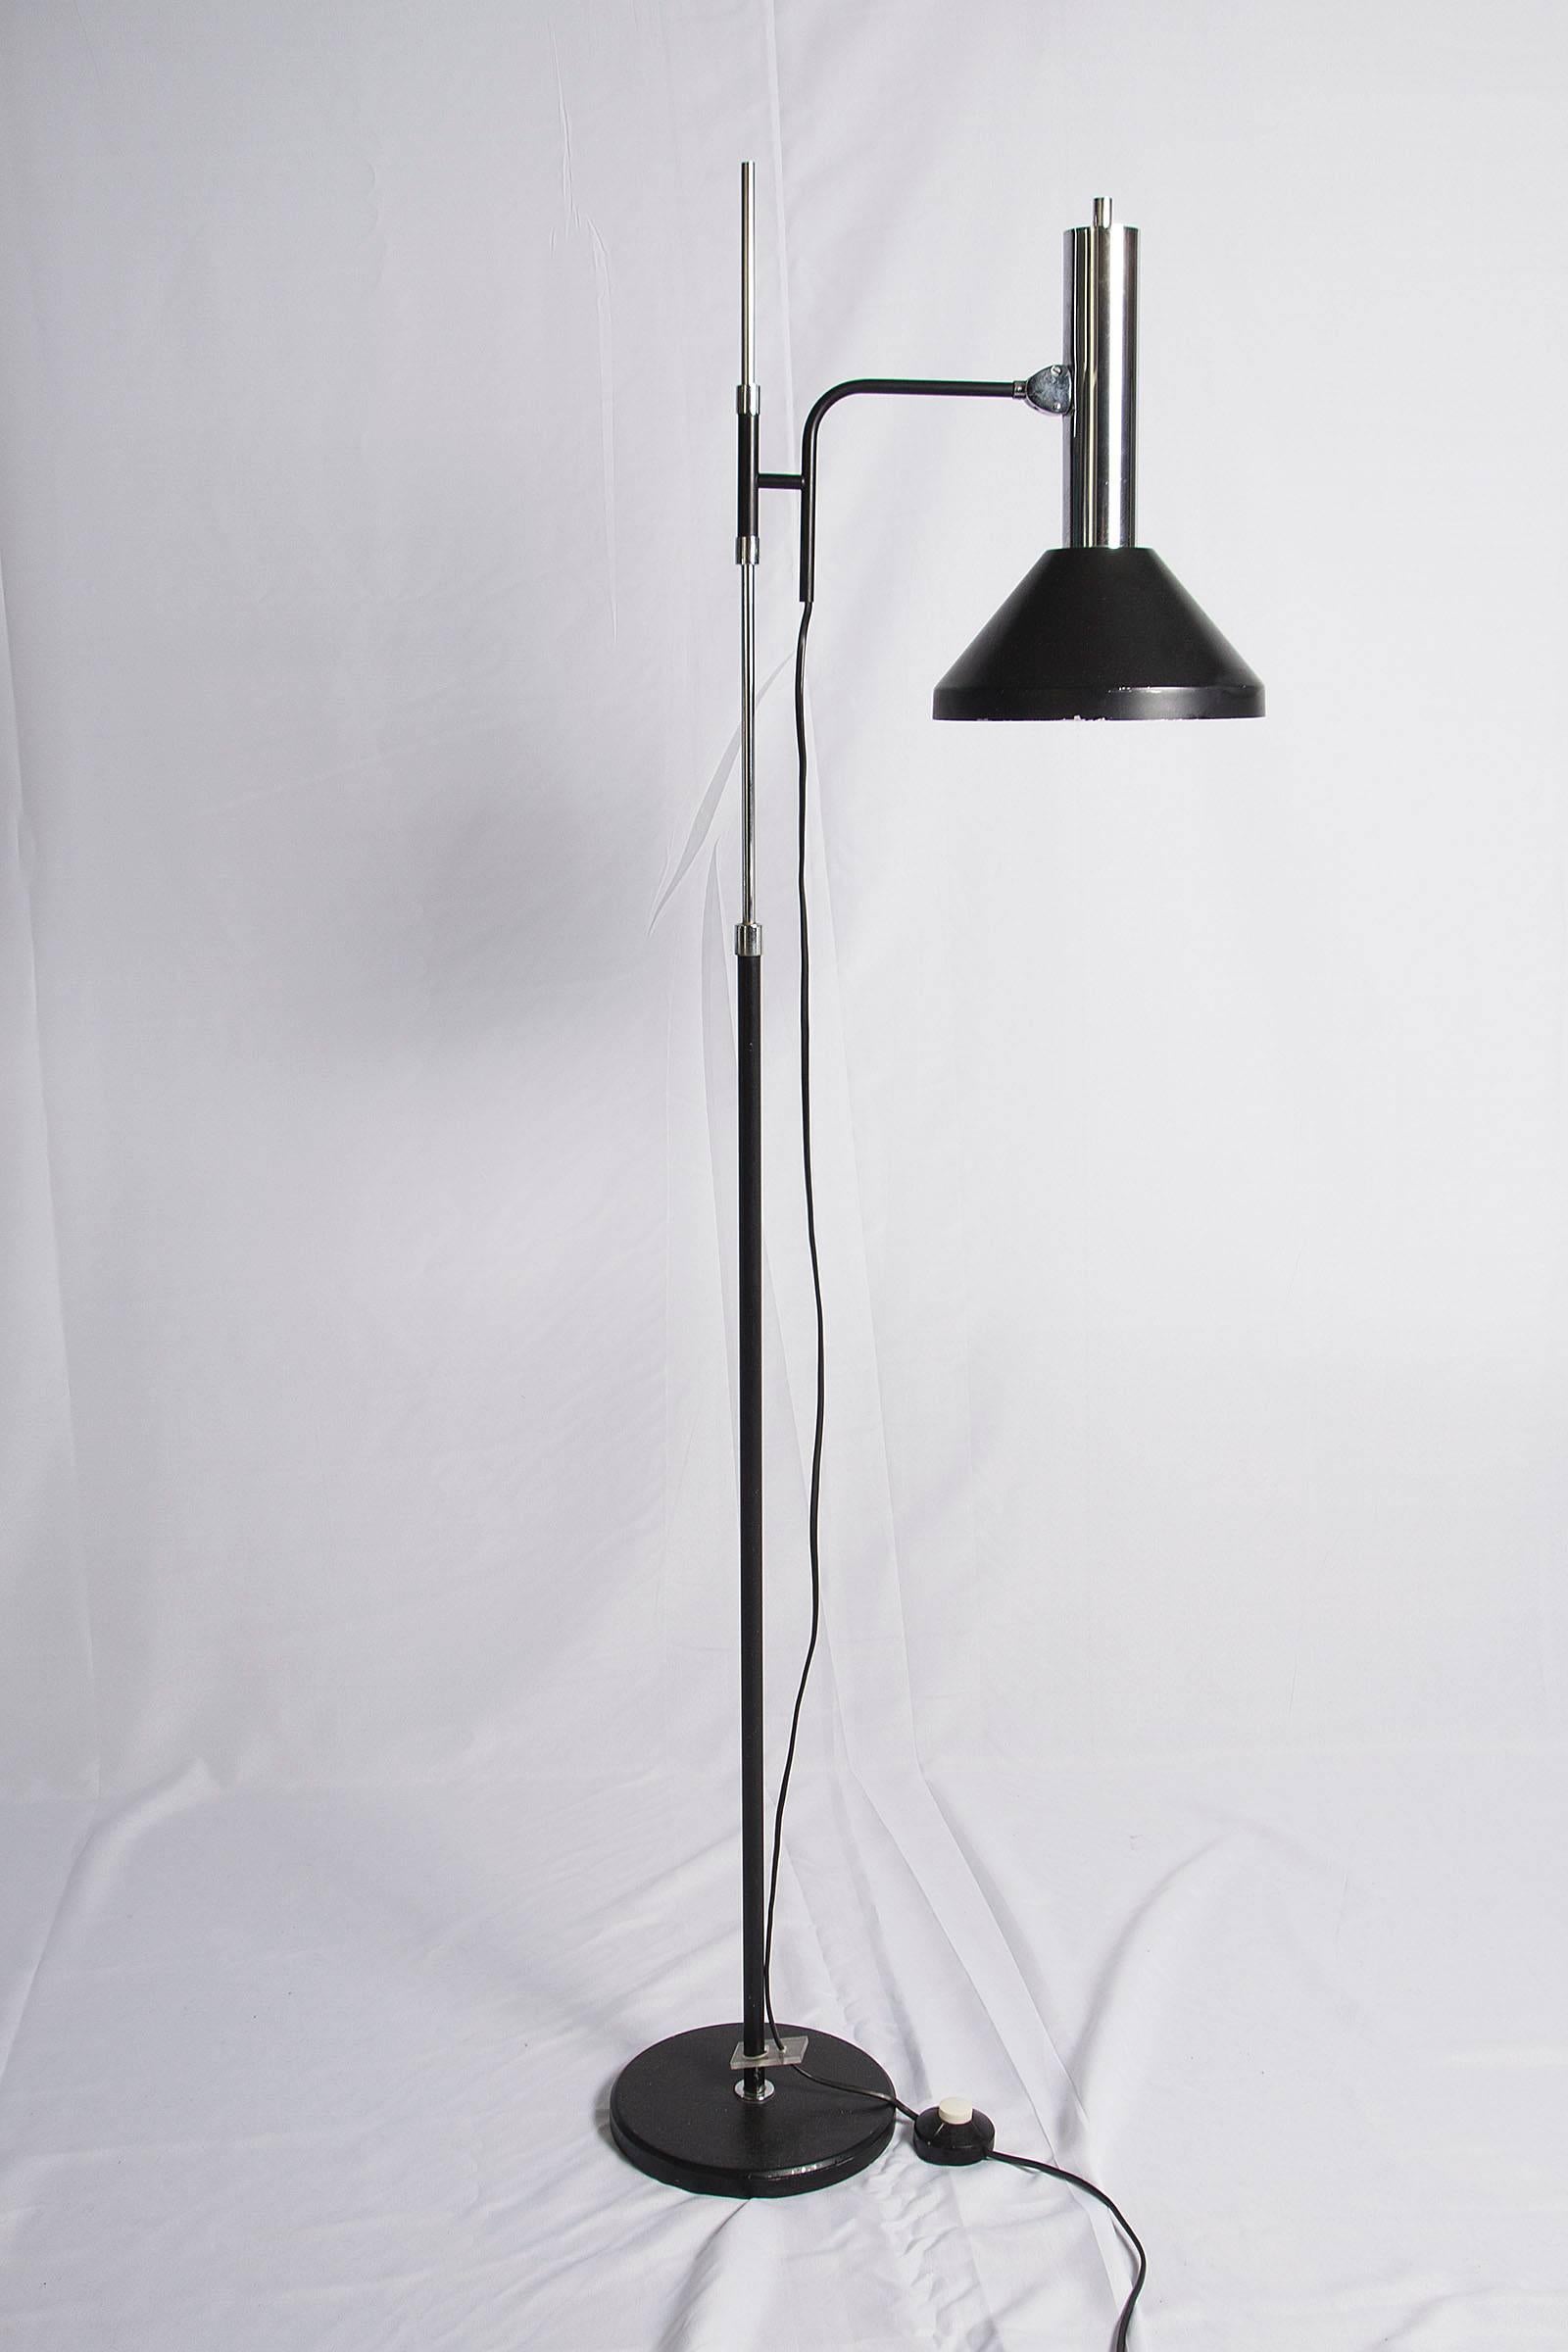 Black and chrome adjustable floor lamp, 1970s.
